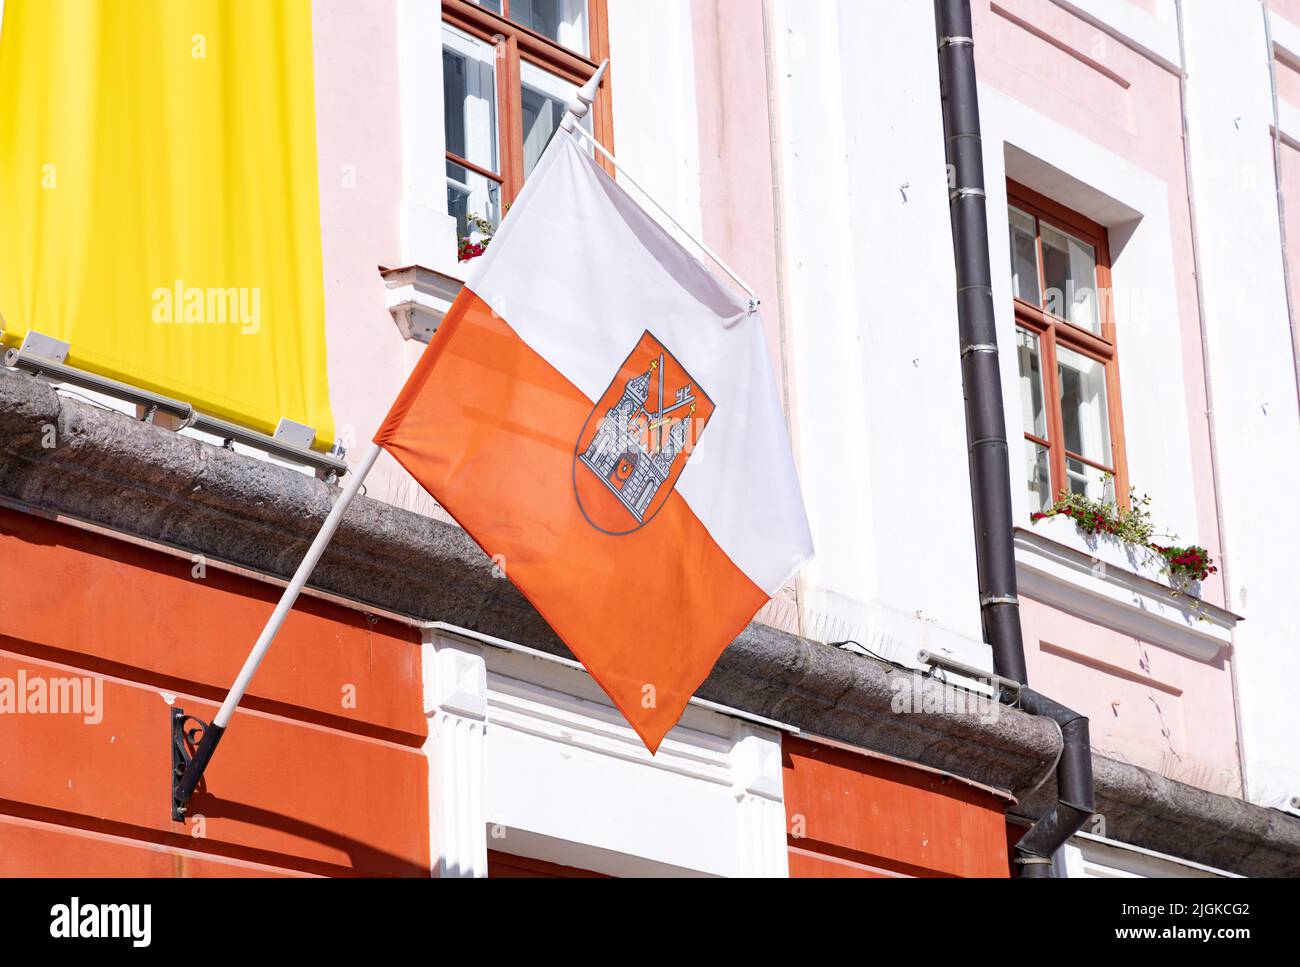 Tartu flag; The flag of the city of Tartu flying, Tartu, Estonia Europe Stock Photo